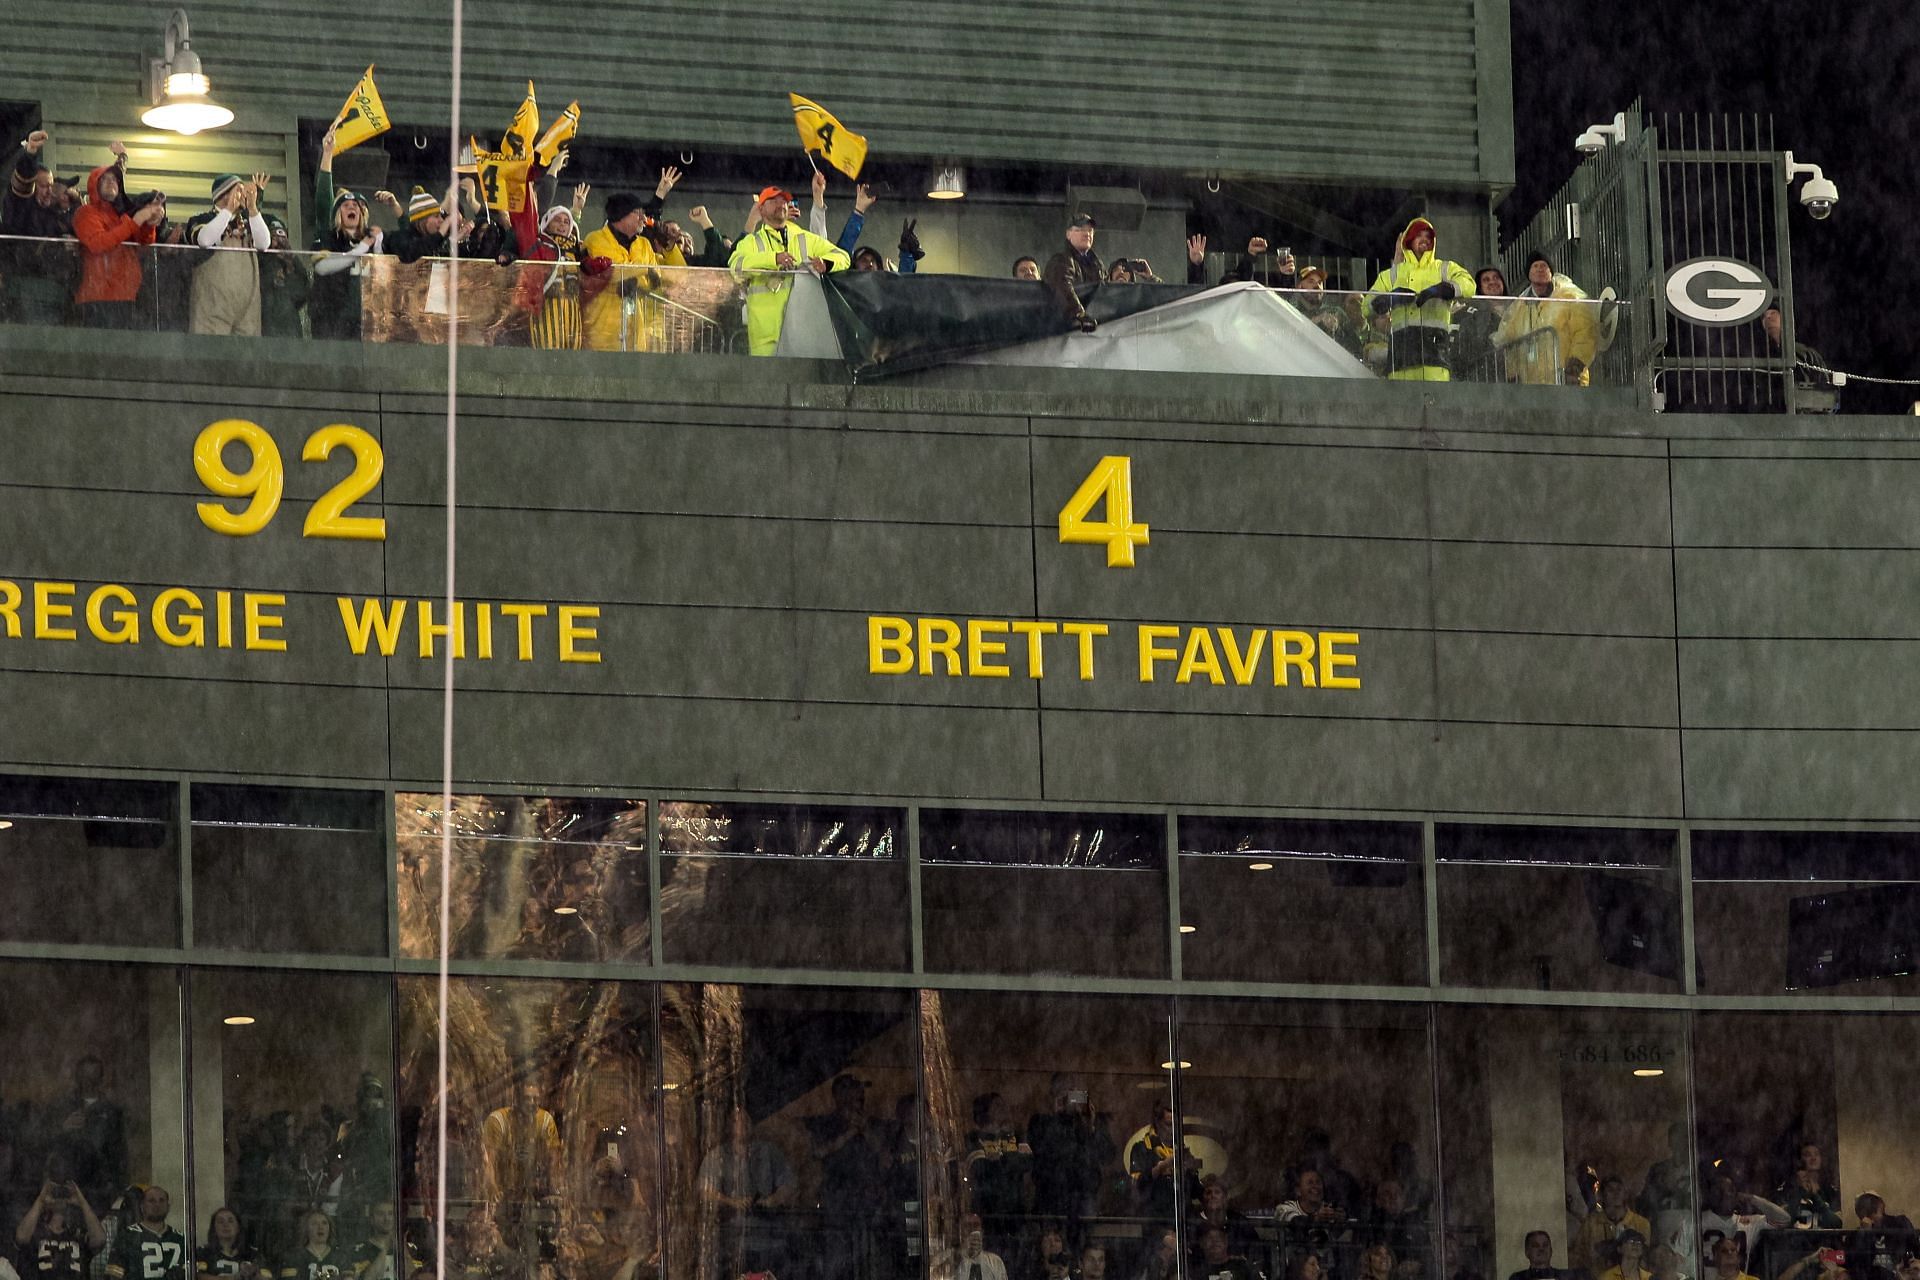 Brett Favre wore many uniforms but will always be a Green Bay Packer.